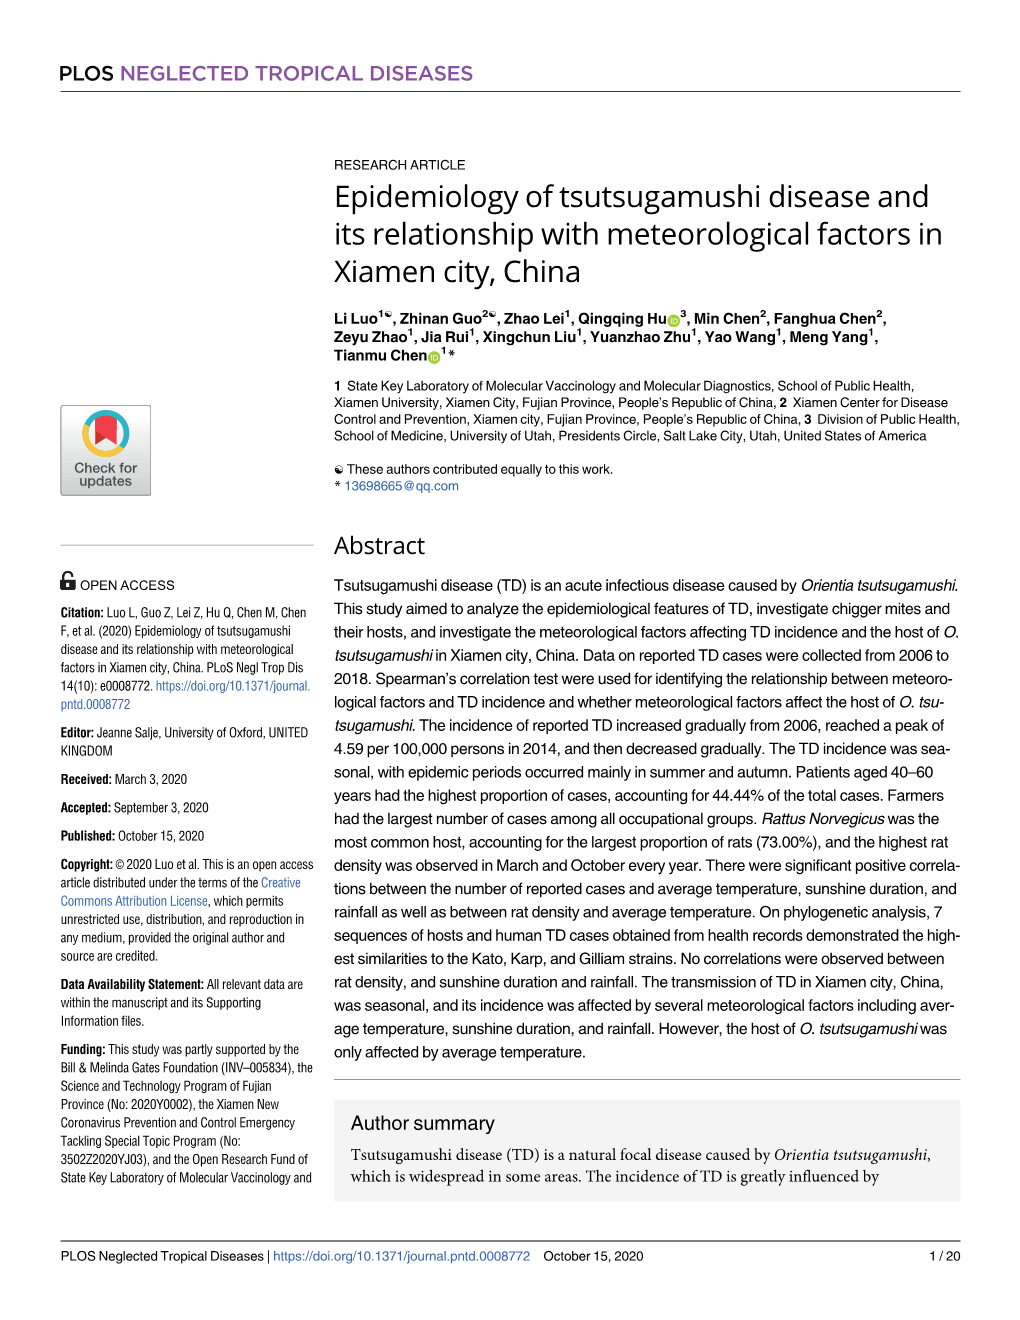 Epidemiology of Tsutsugamushi Disease and Its Relationship with Meteorological Factors in Xiamen City, China